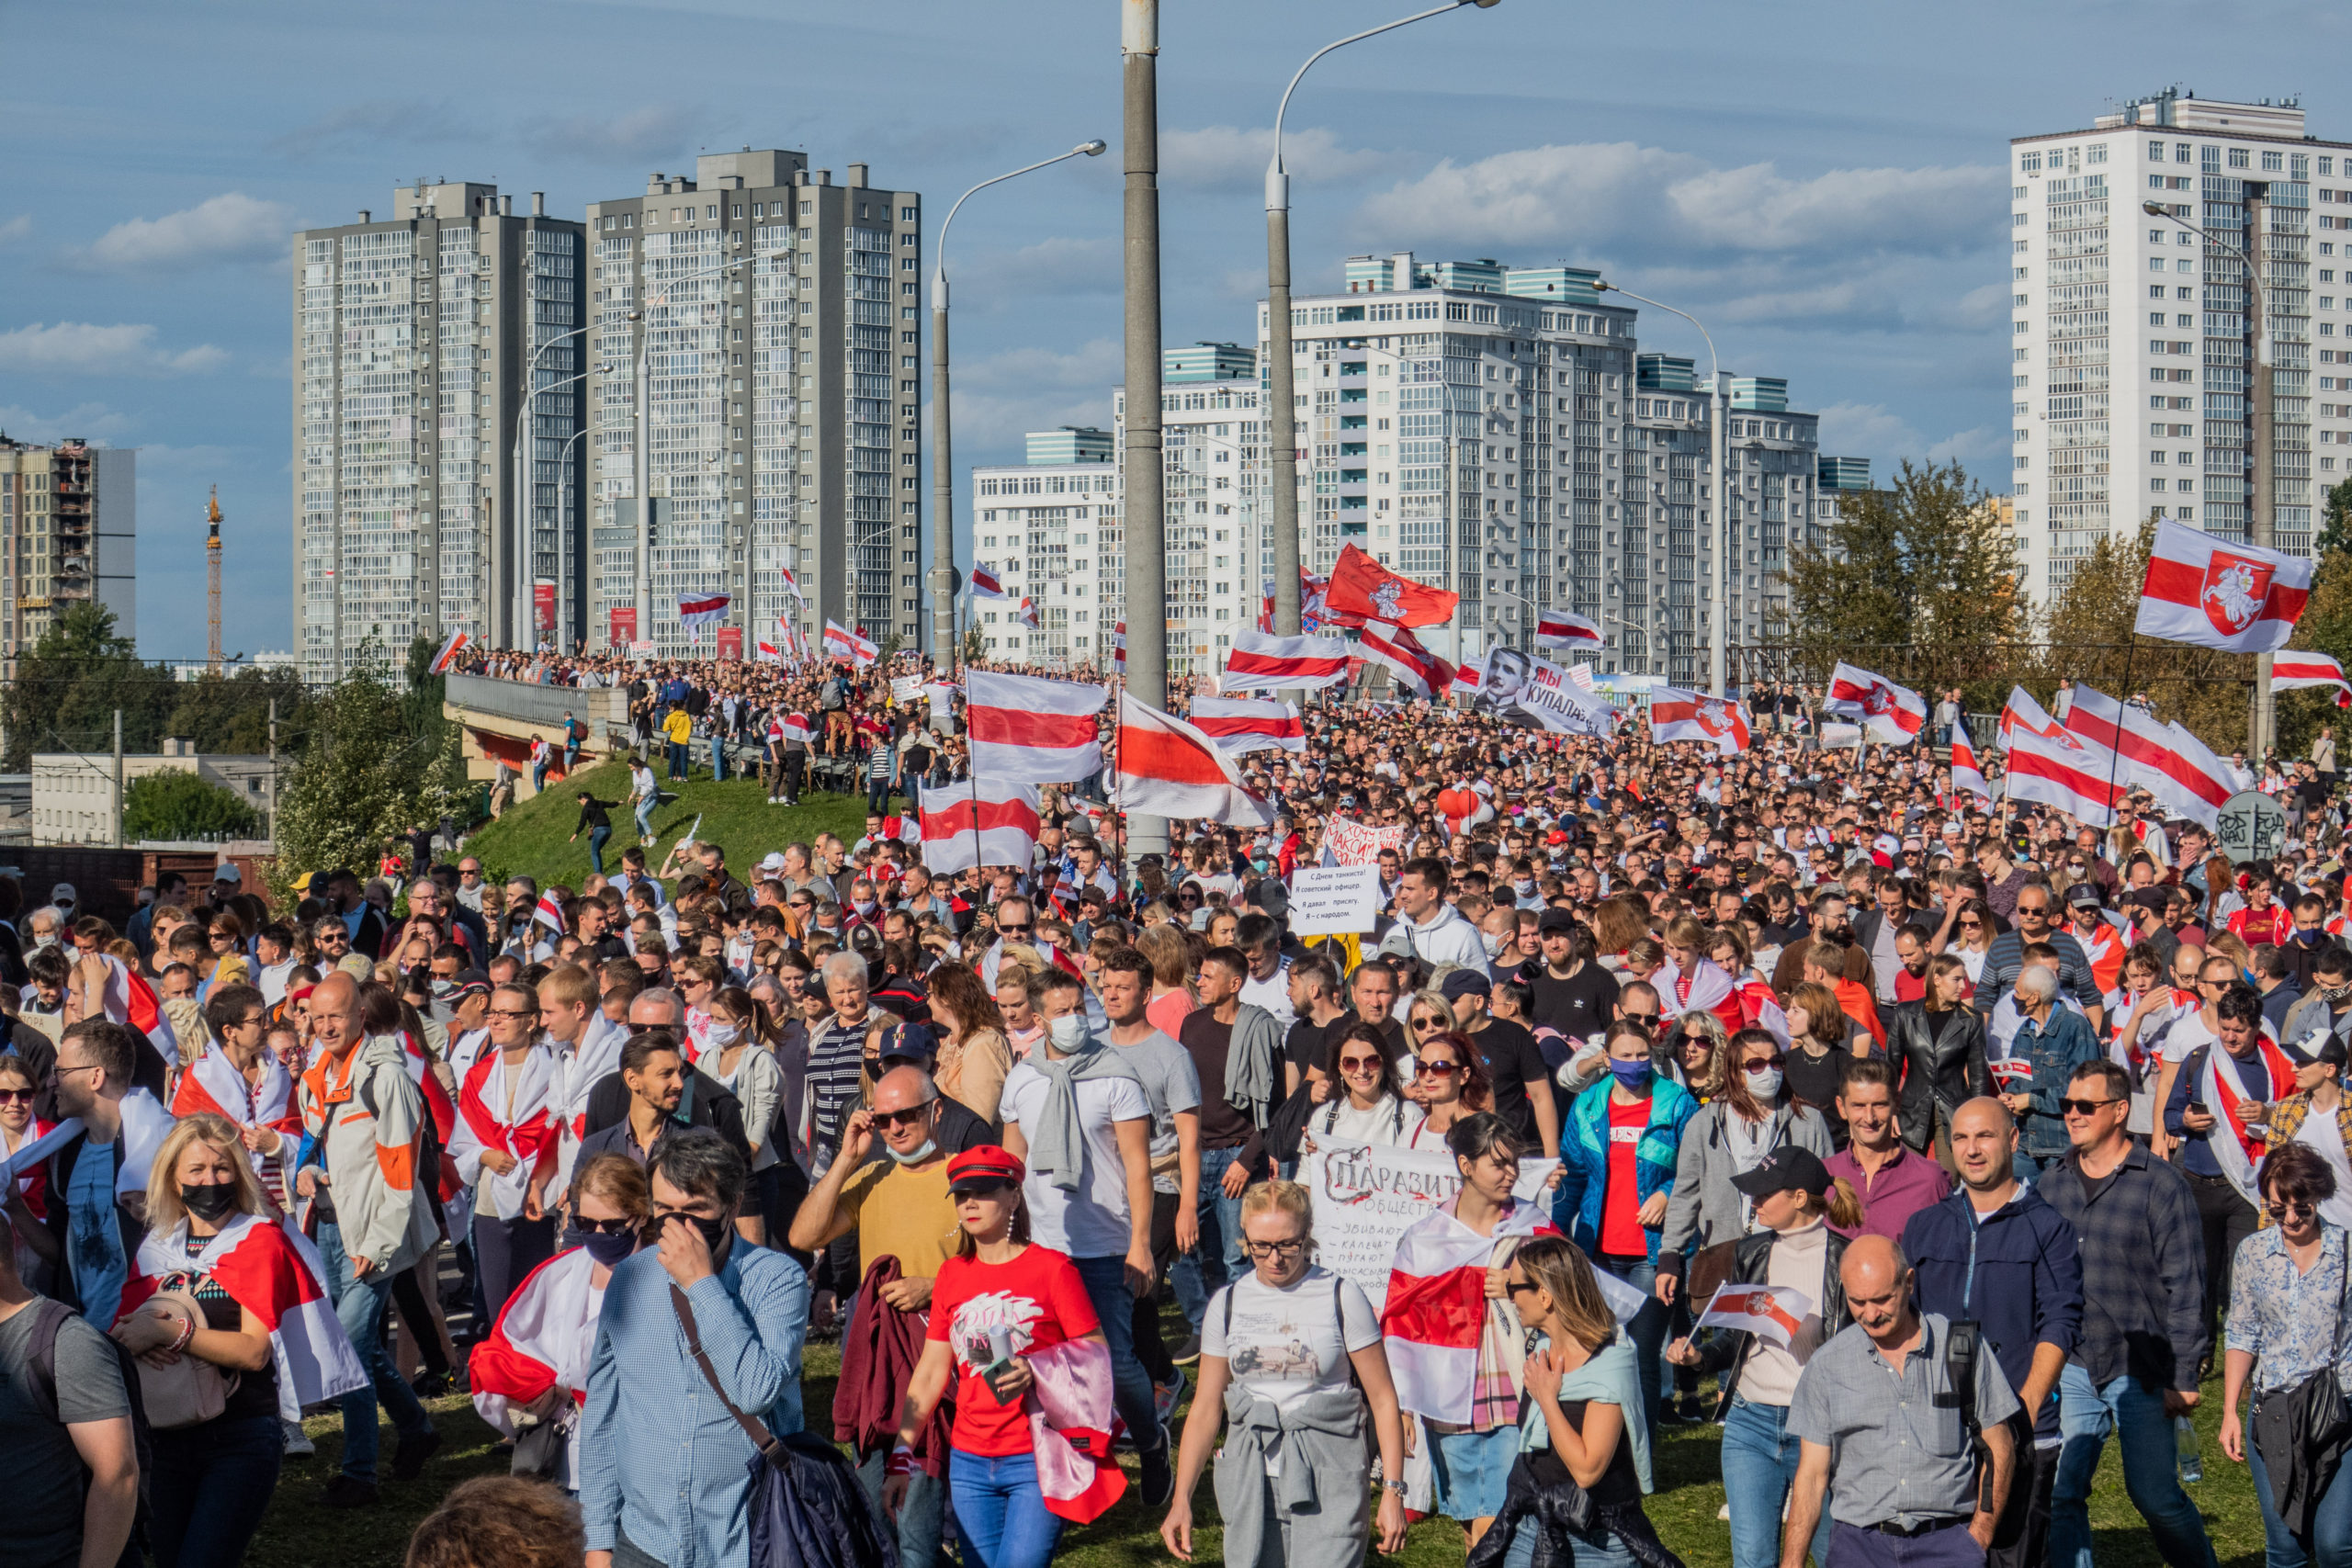 Protest rally against Lukashenko, 13 September 2020. Minsk, Belarus by Homoatrox under CC 3.0.